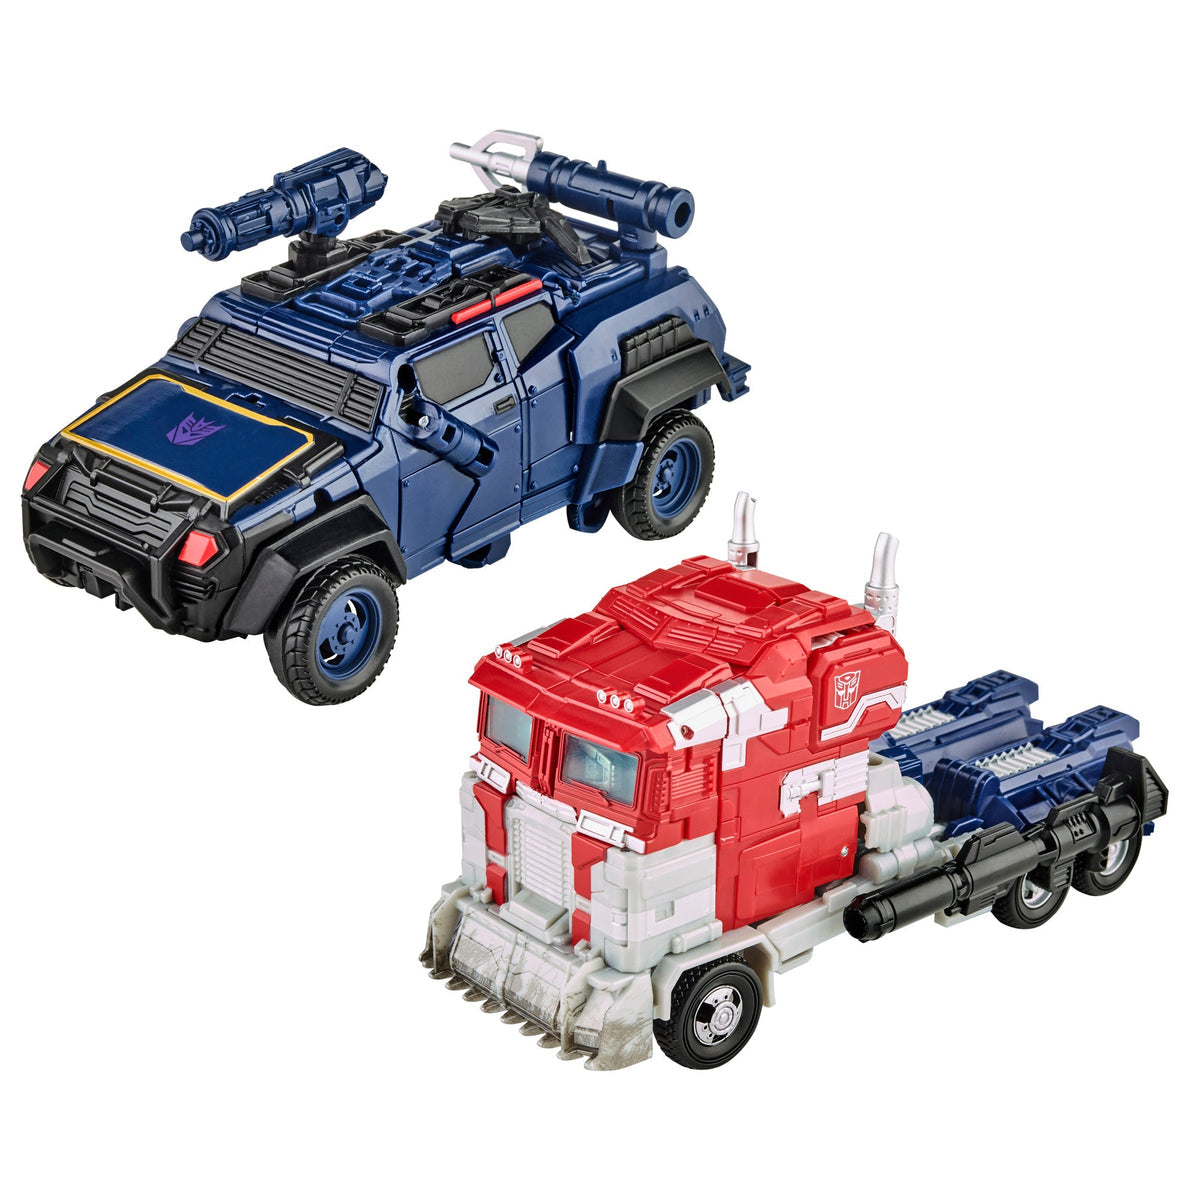 Hasbro - Transformers: Reactivate - Optimus Prime & Soundwave - Marvelous Toys